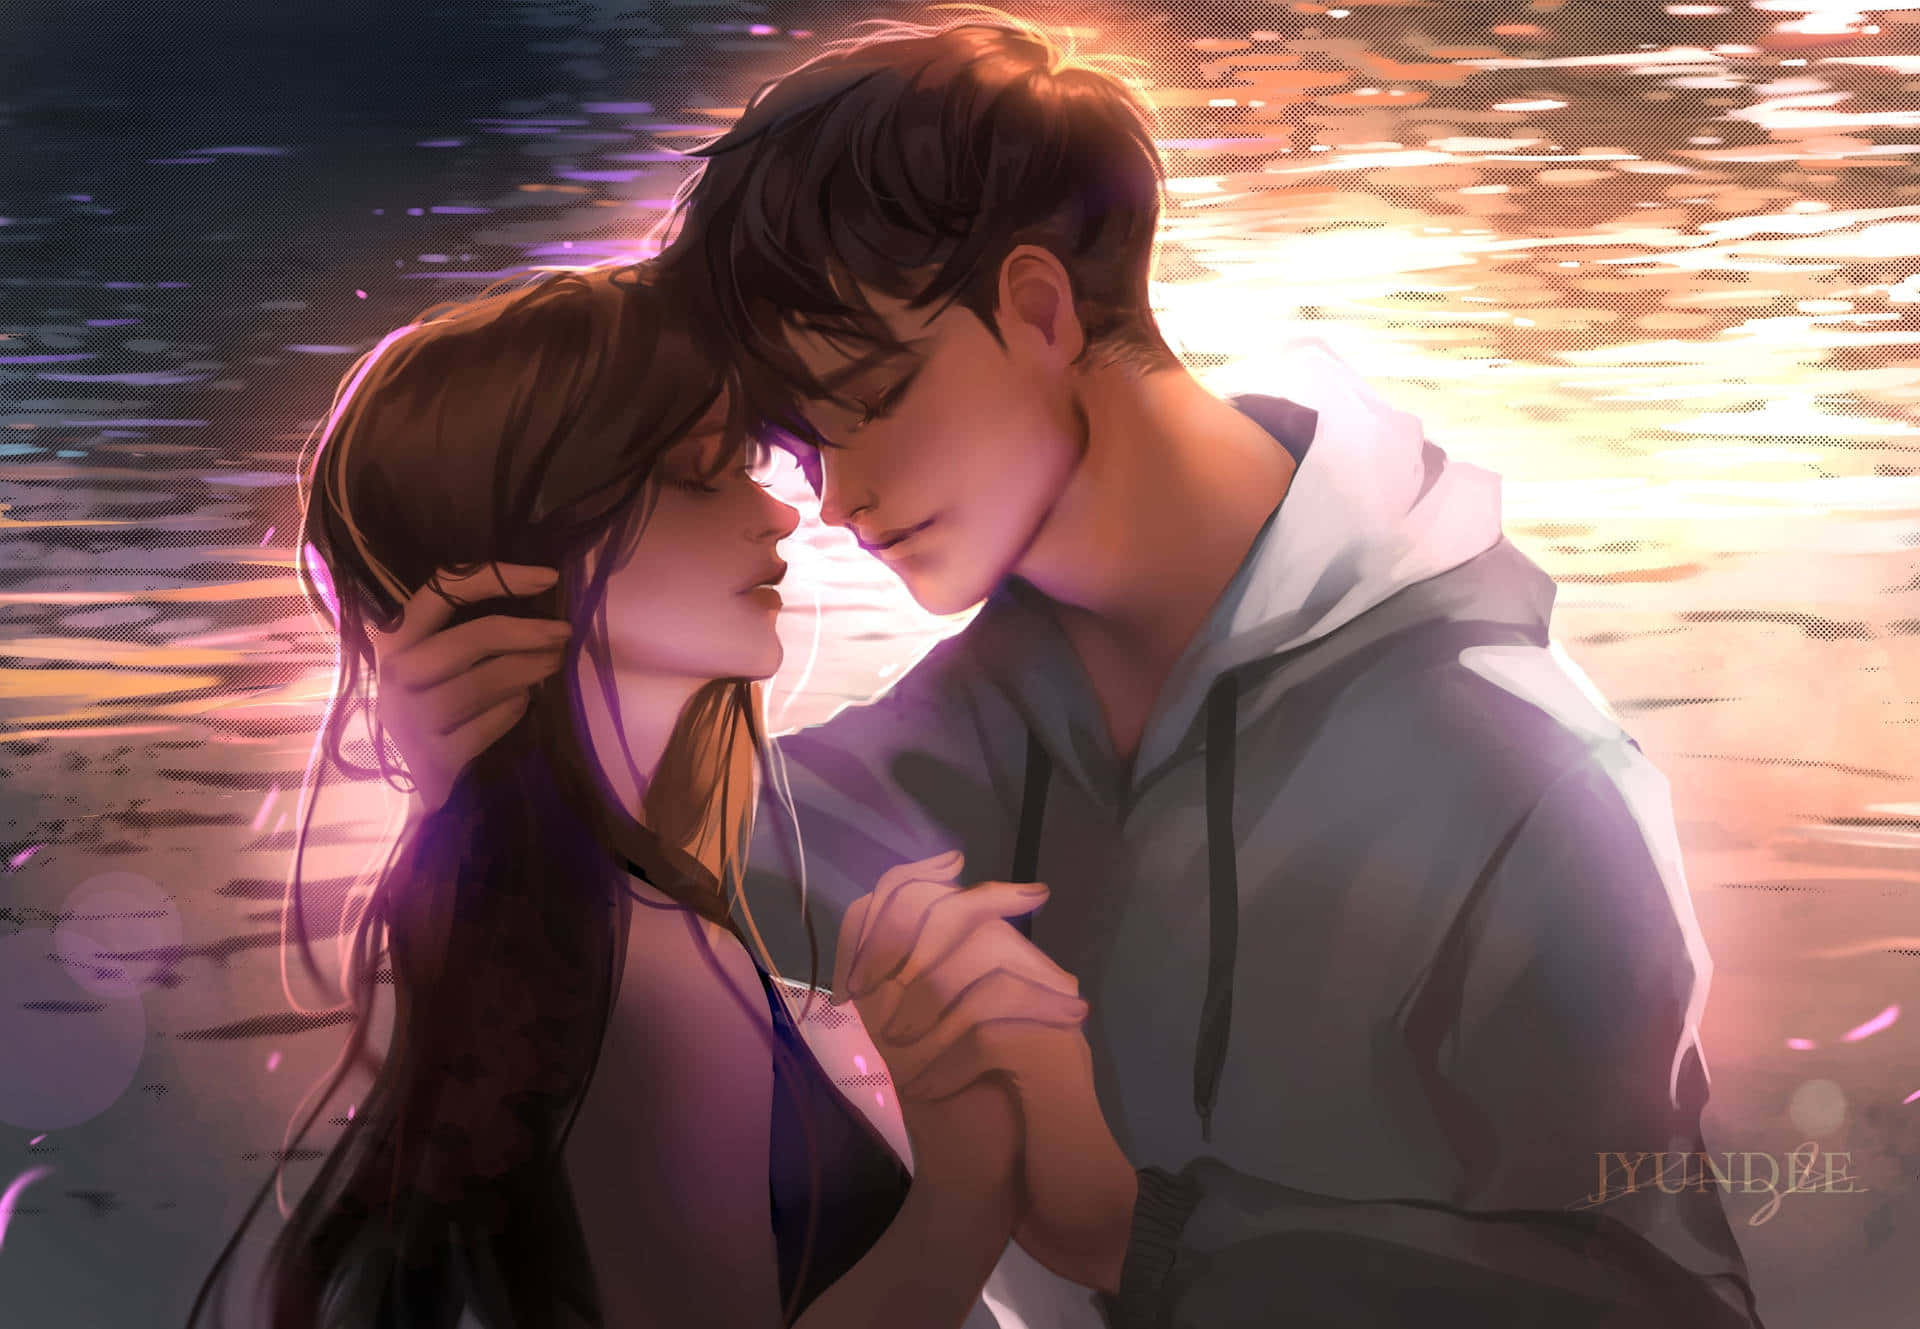 Anime Couple - Anime - Love Wallpaper Download